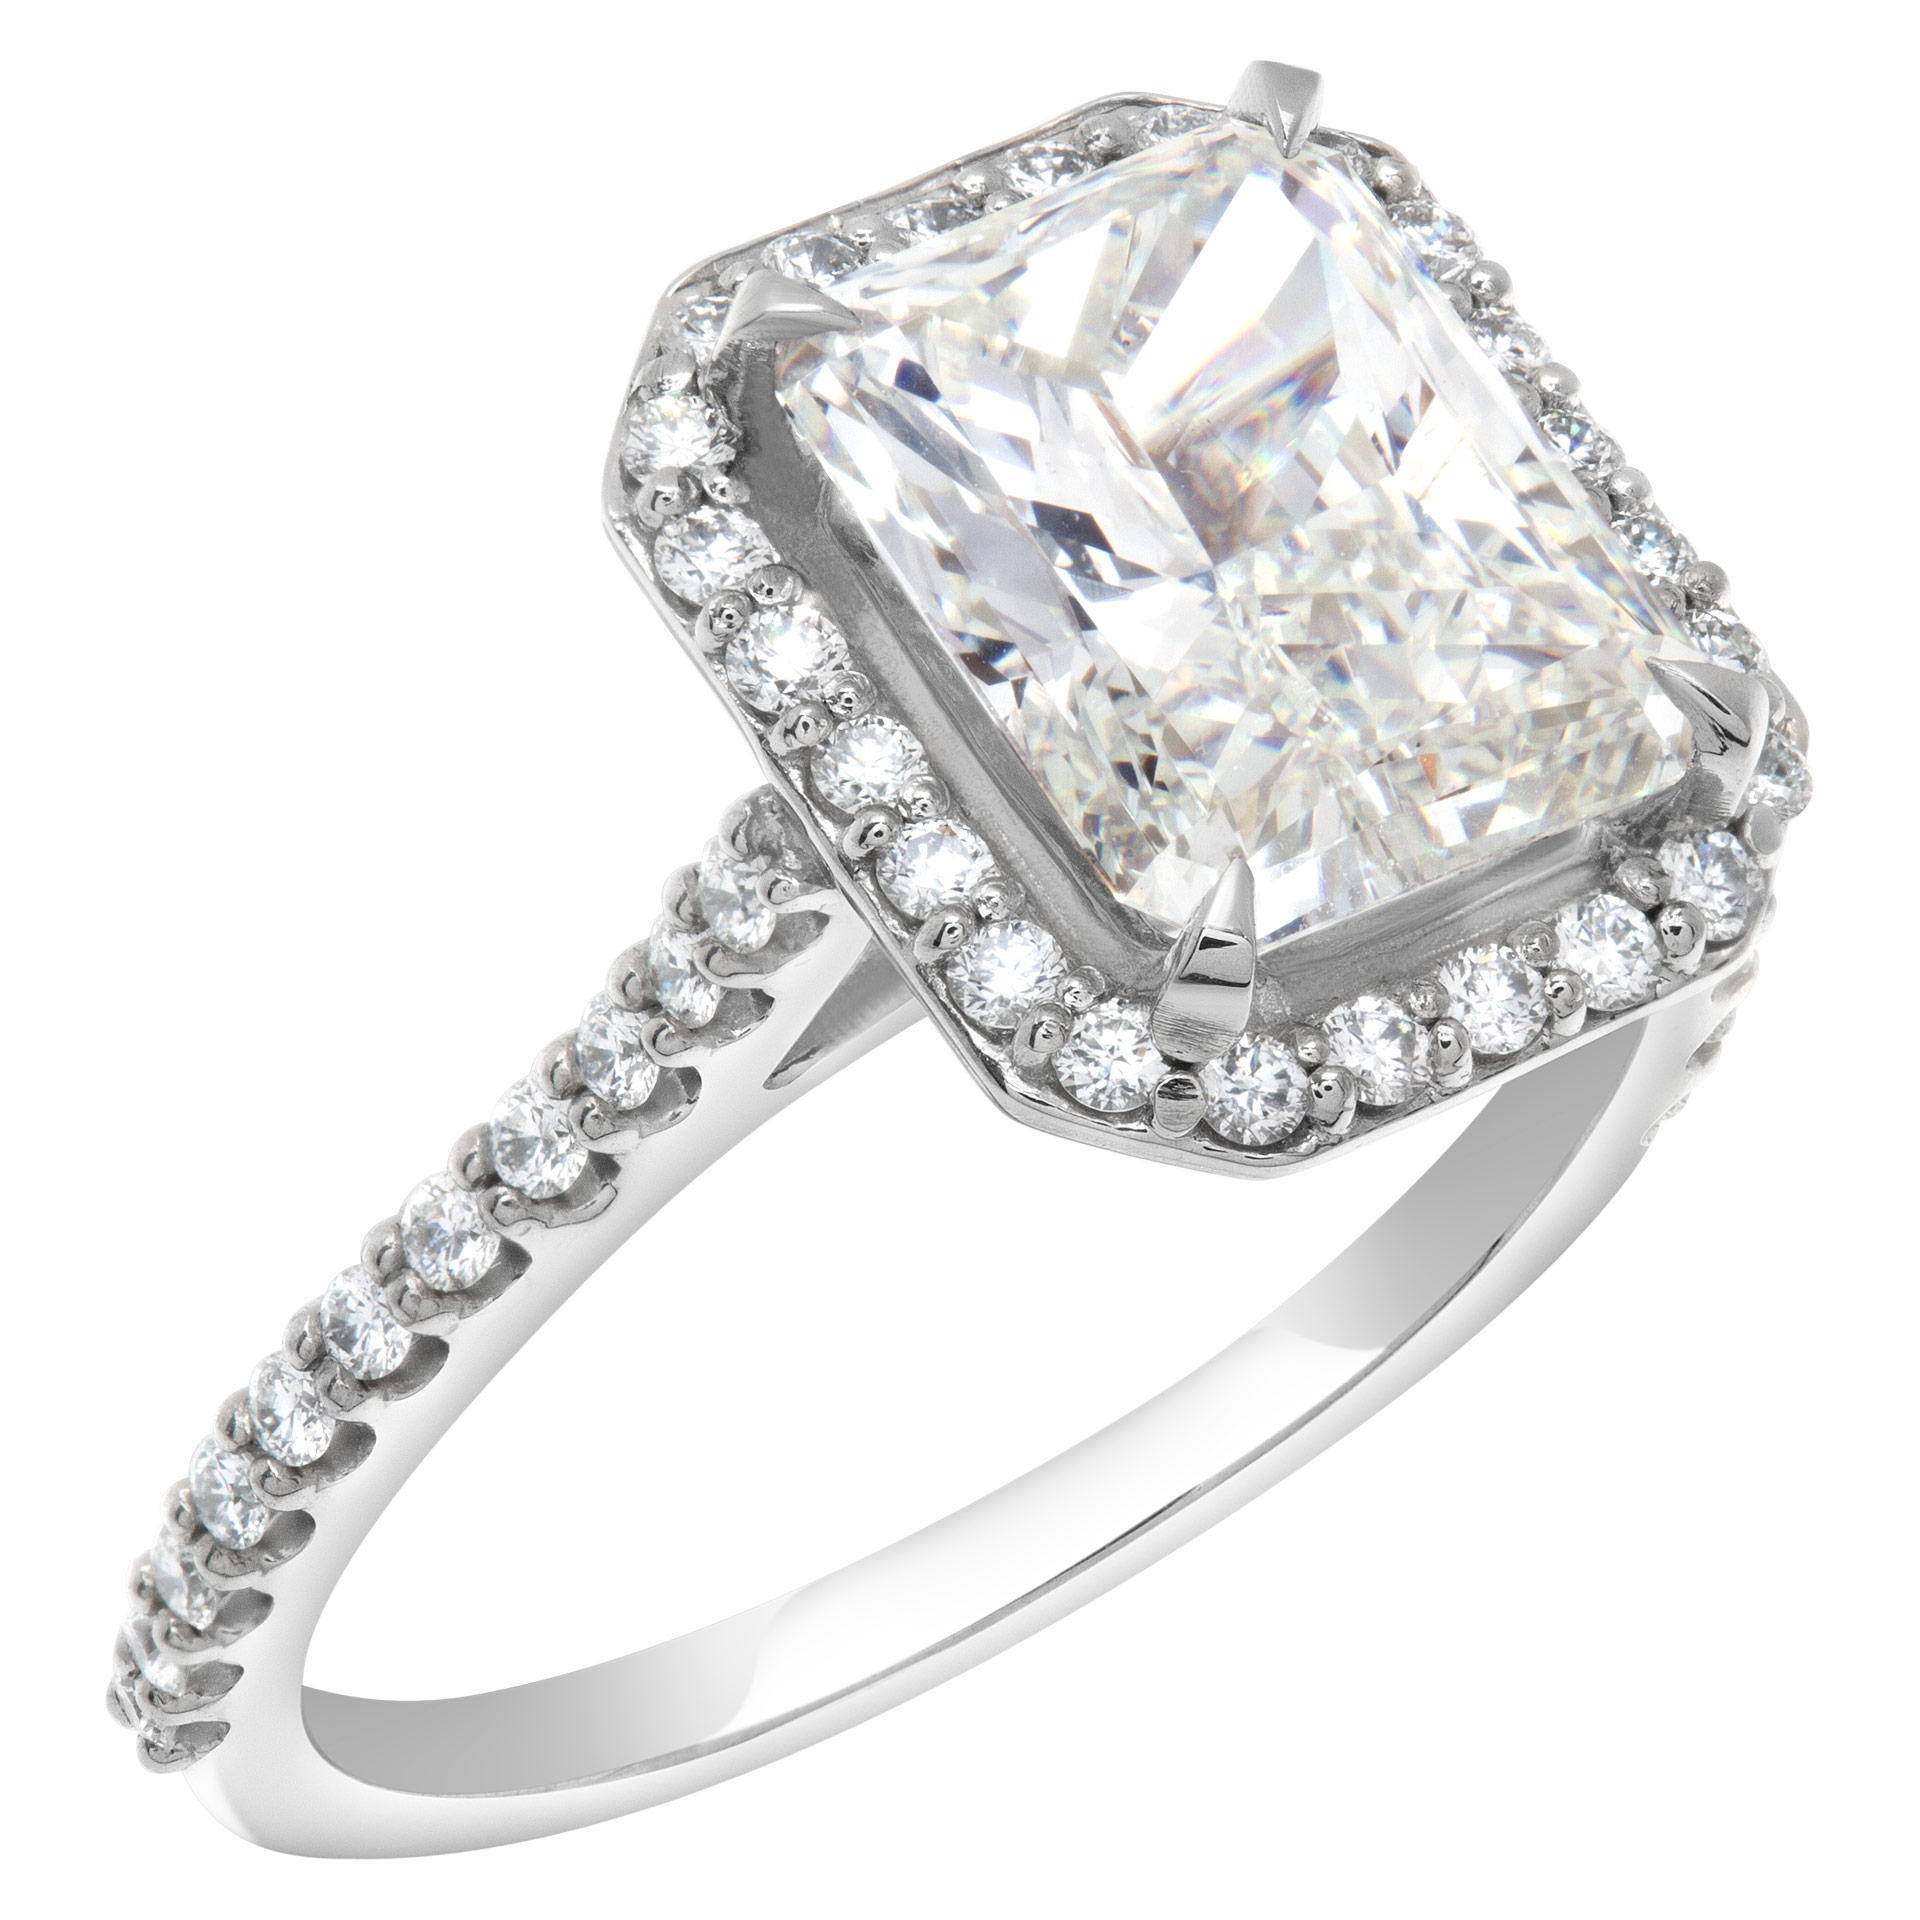 GIA certified cut- cornered rectangular modified brilliant cut diamond 3.01 carat (I color, VS2 clarity image 2